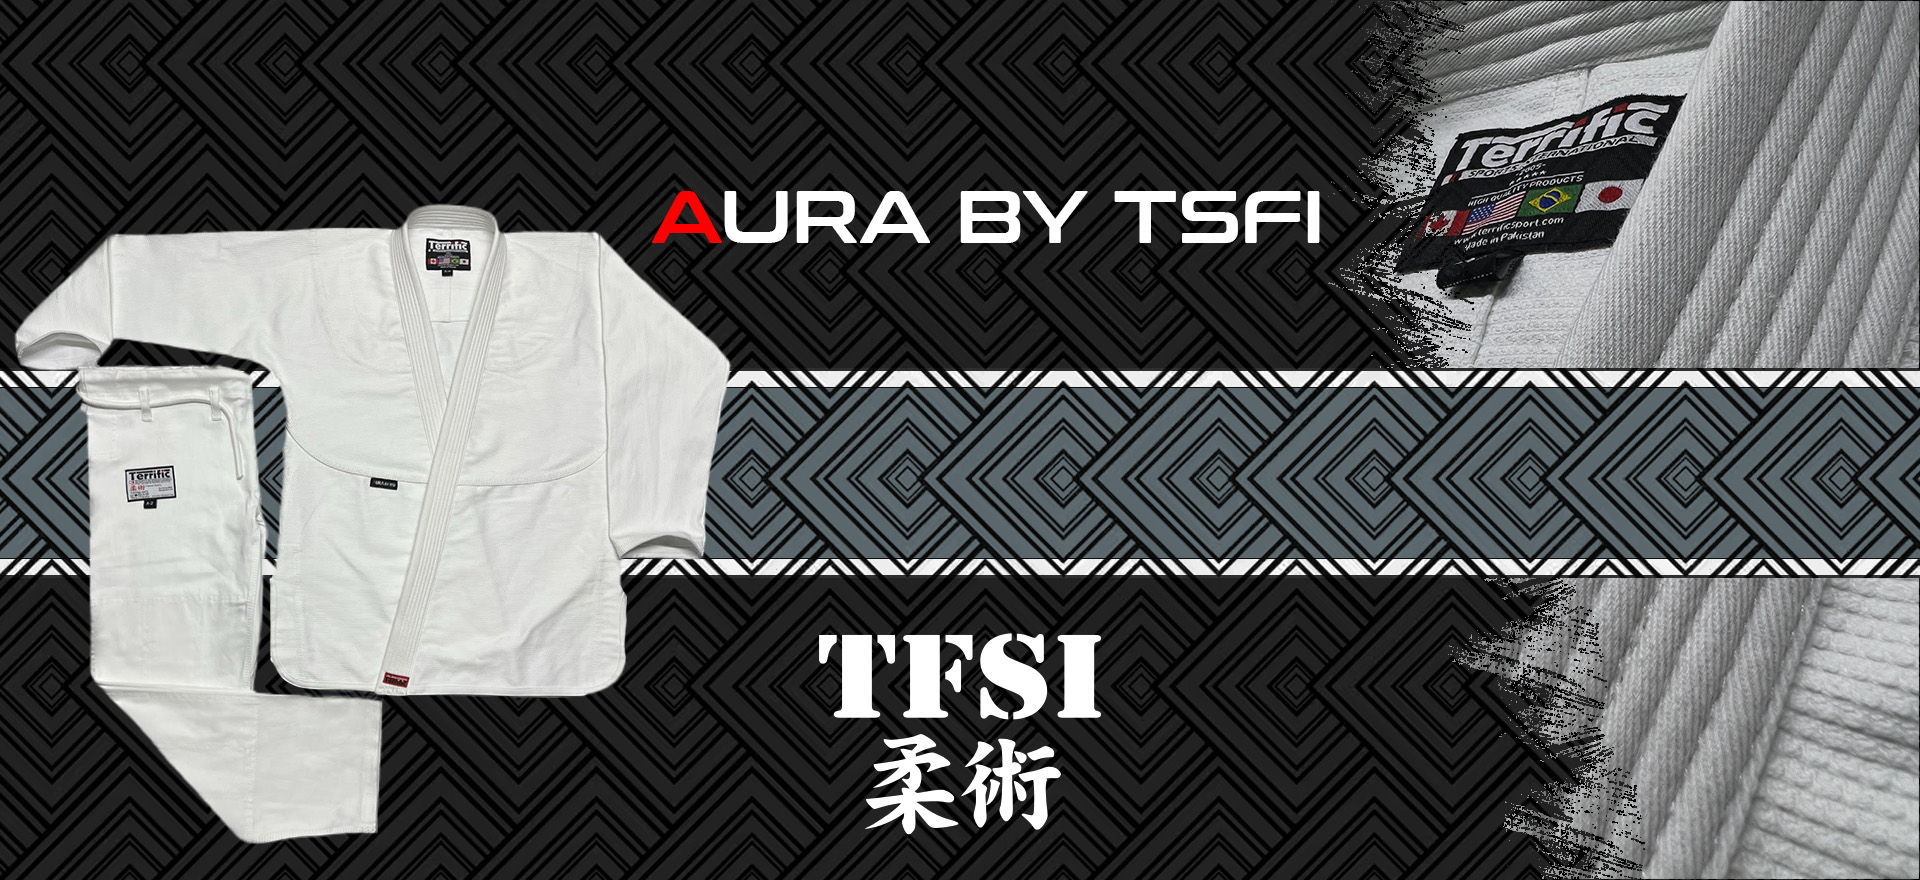 Aura by tsfi slide White